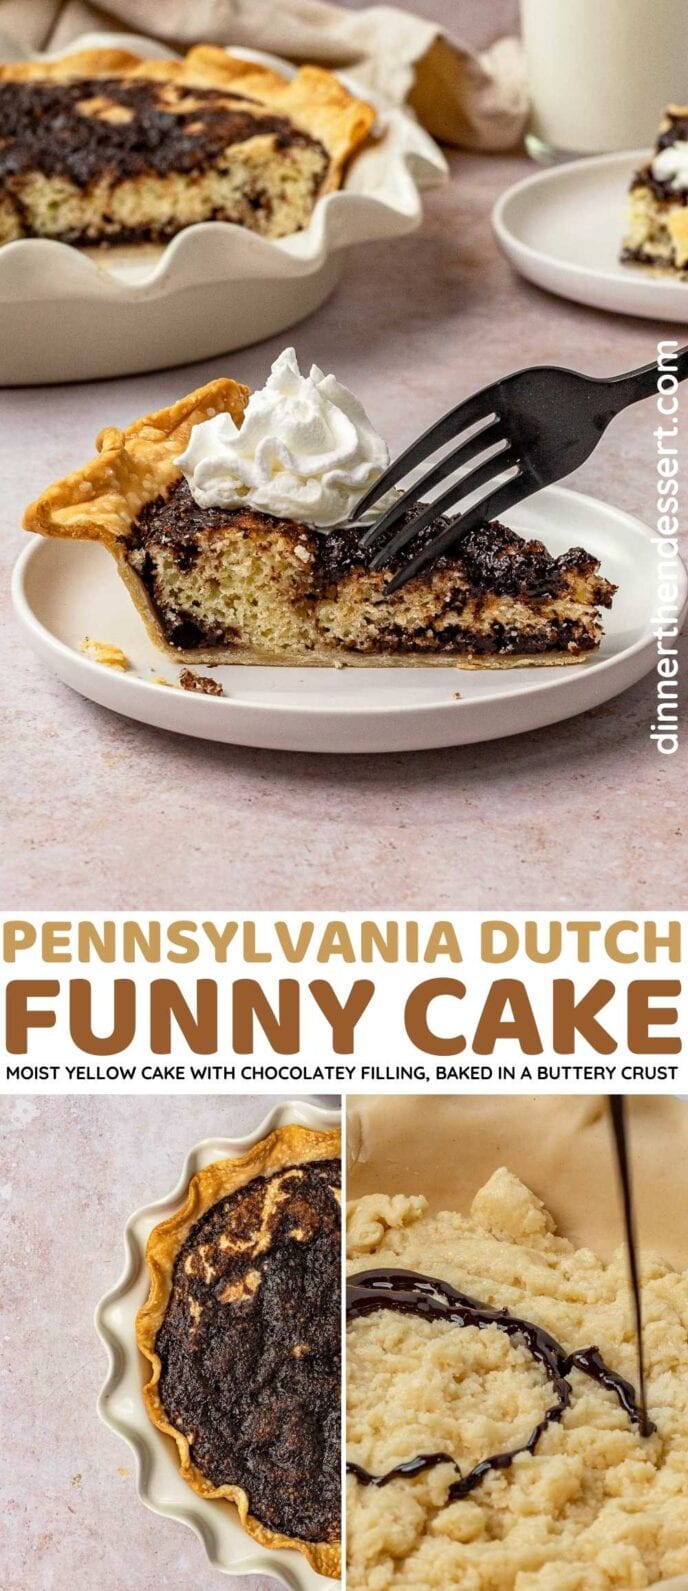 Pennsylvania Dutch Funny Cake collage